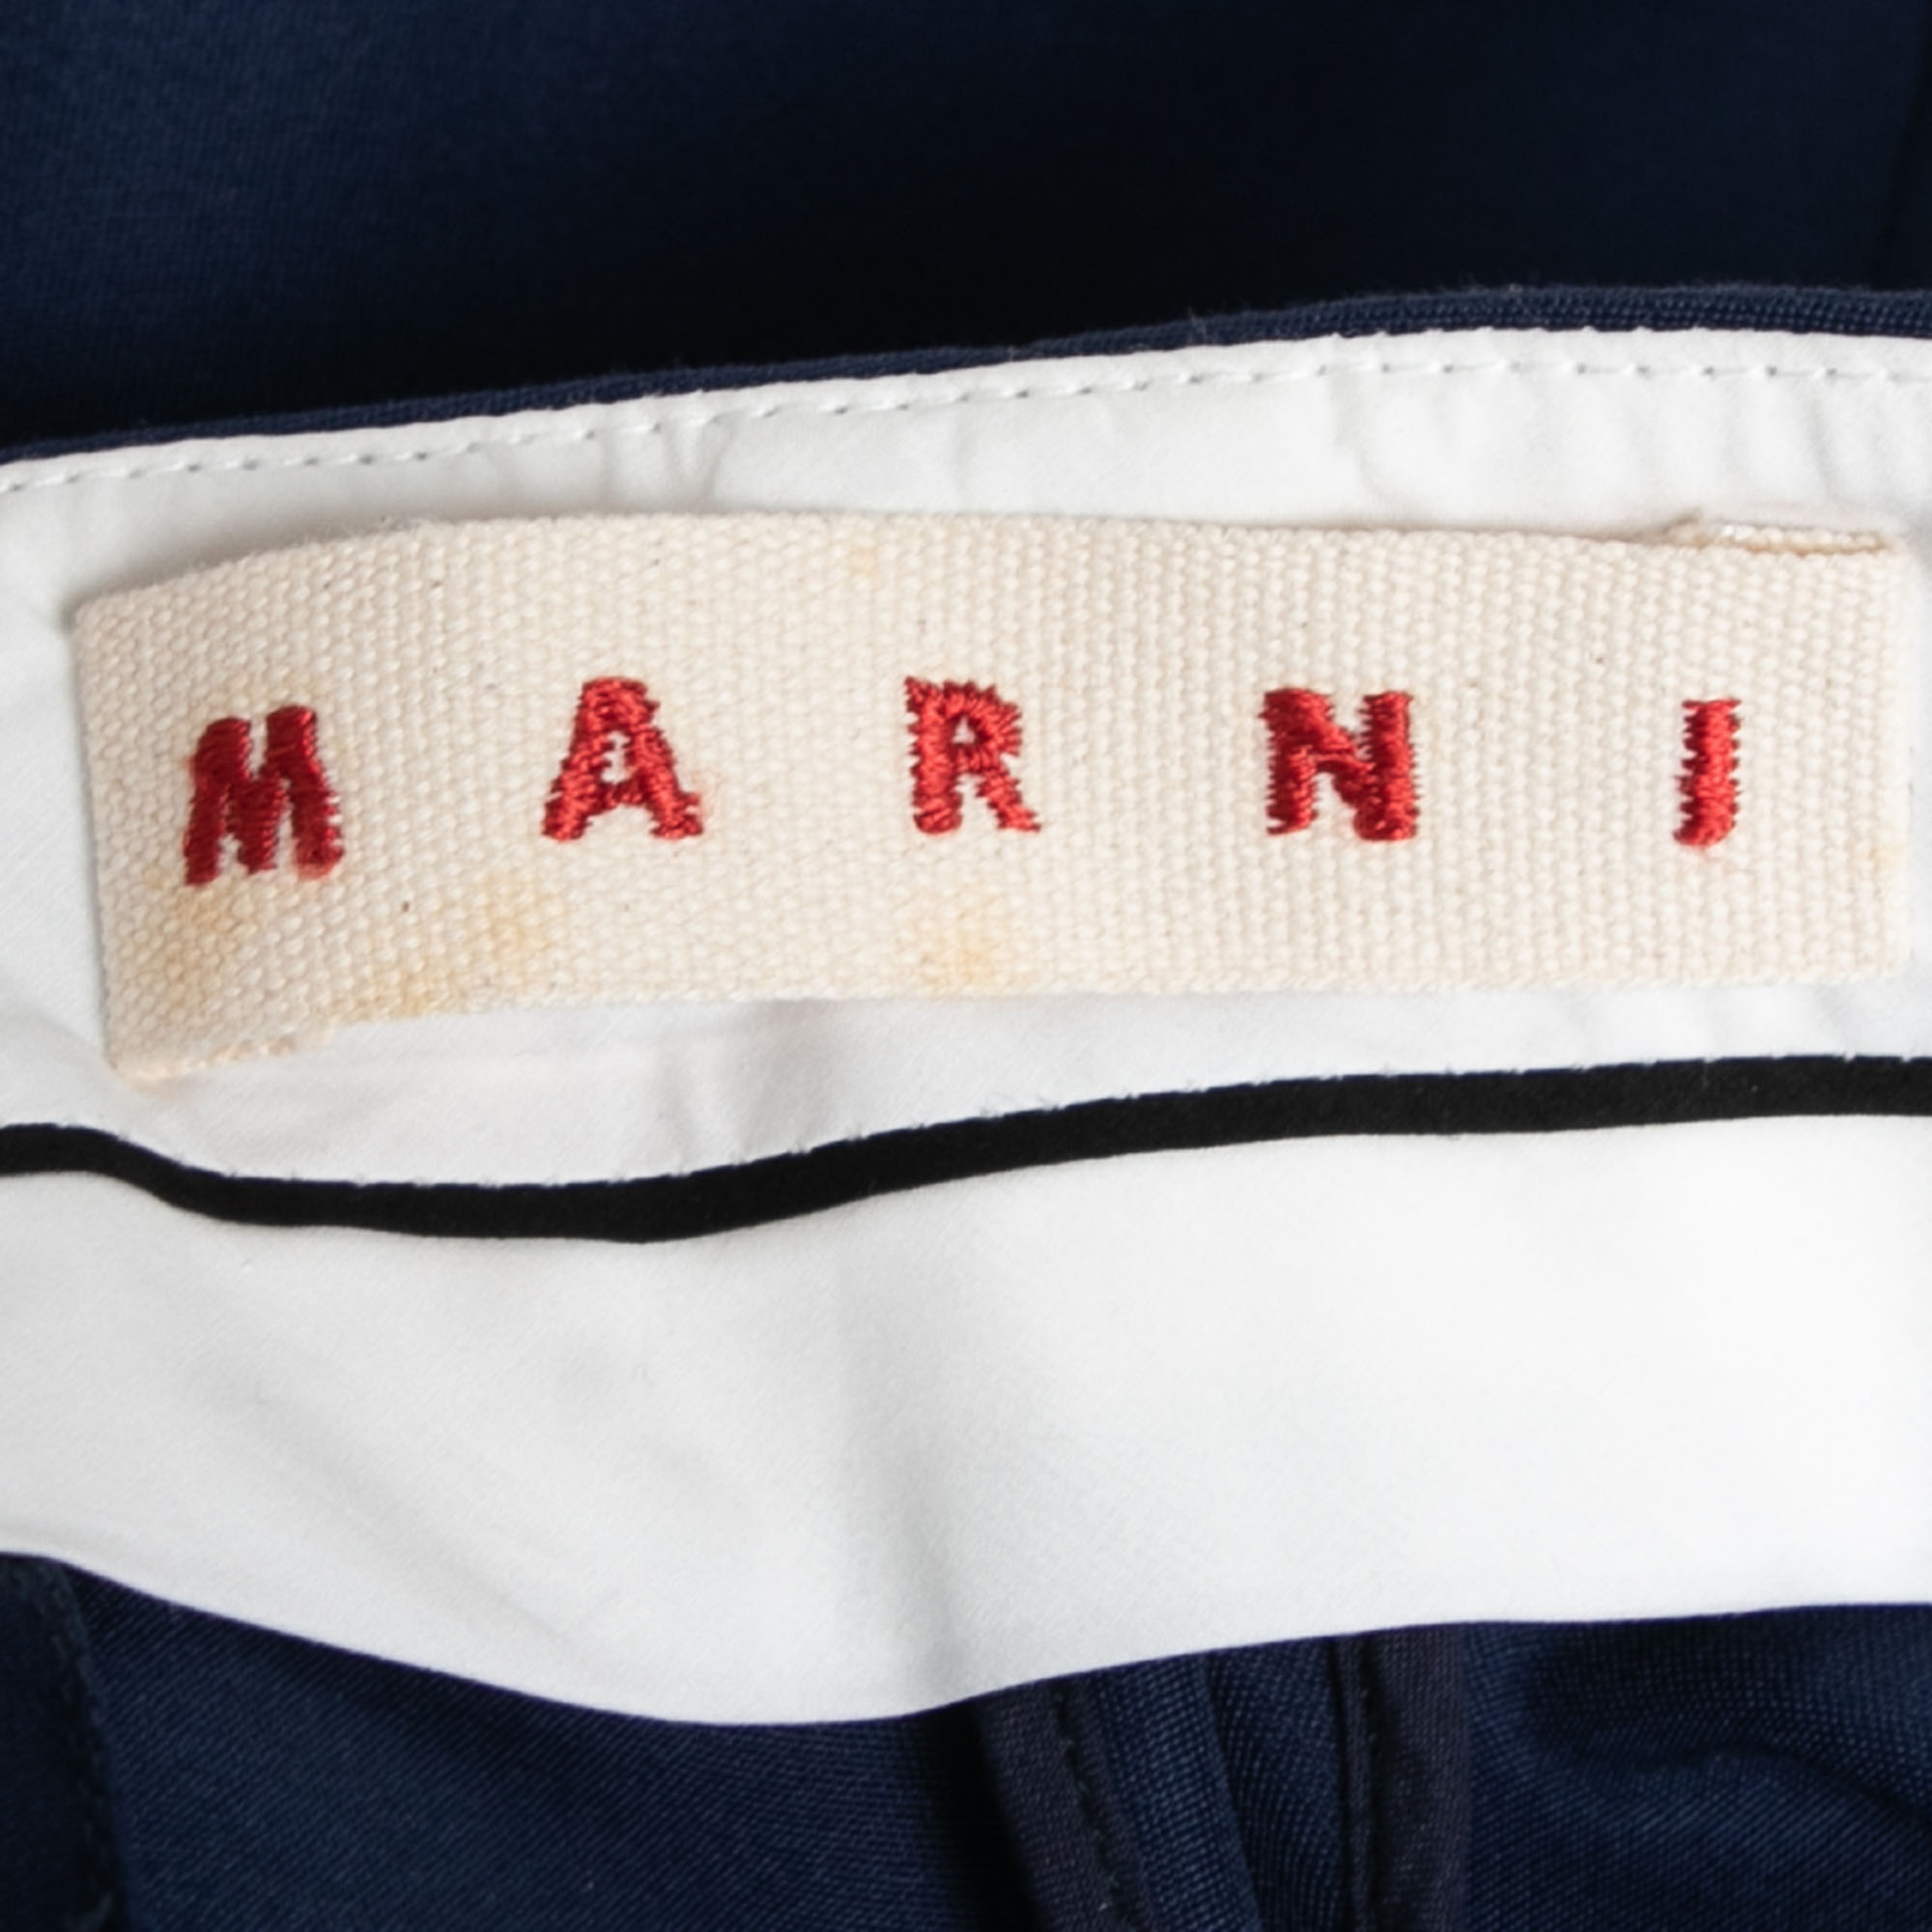 Marni Navy Blue Cotton Trouser M